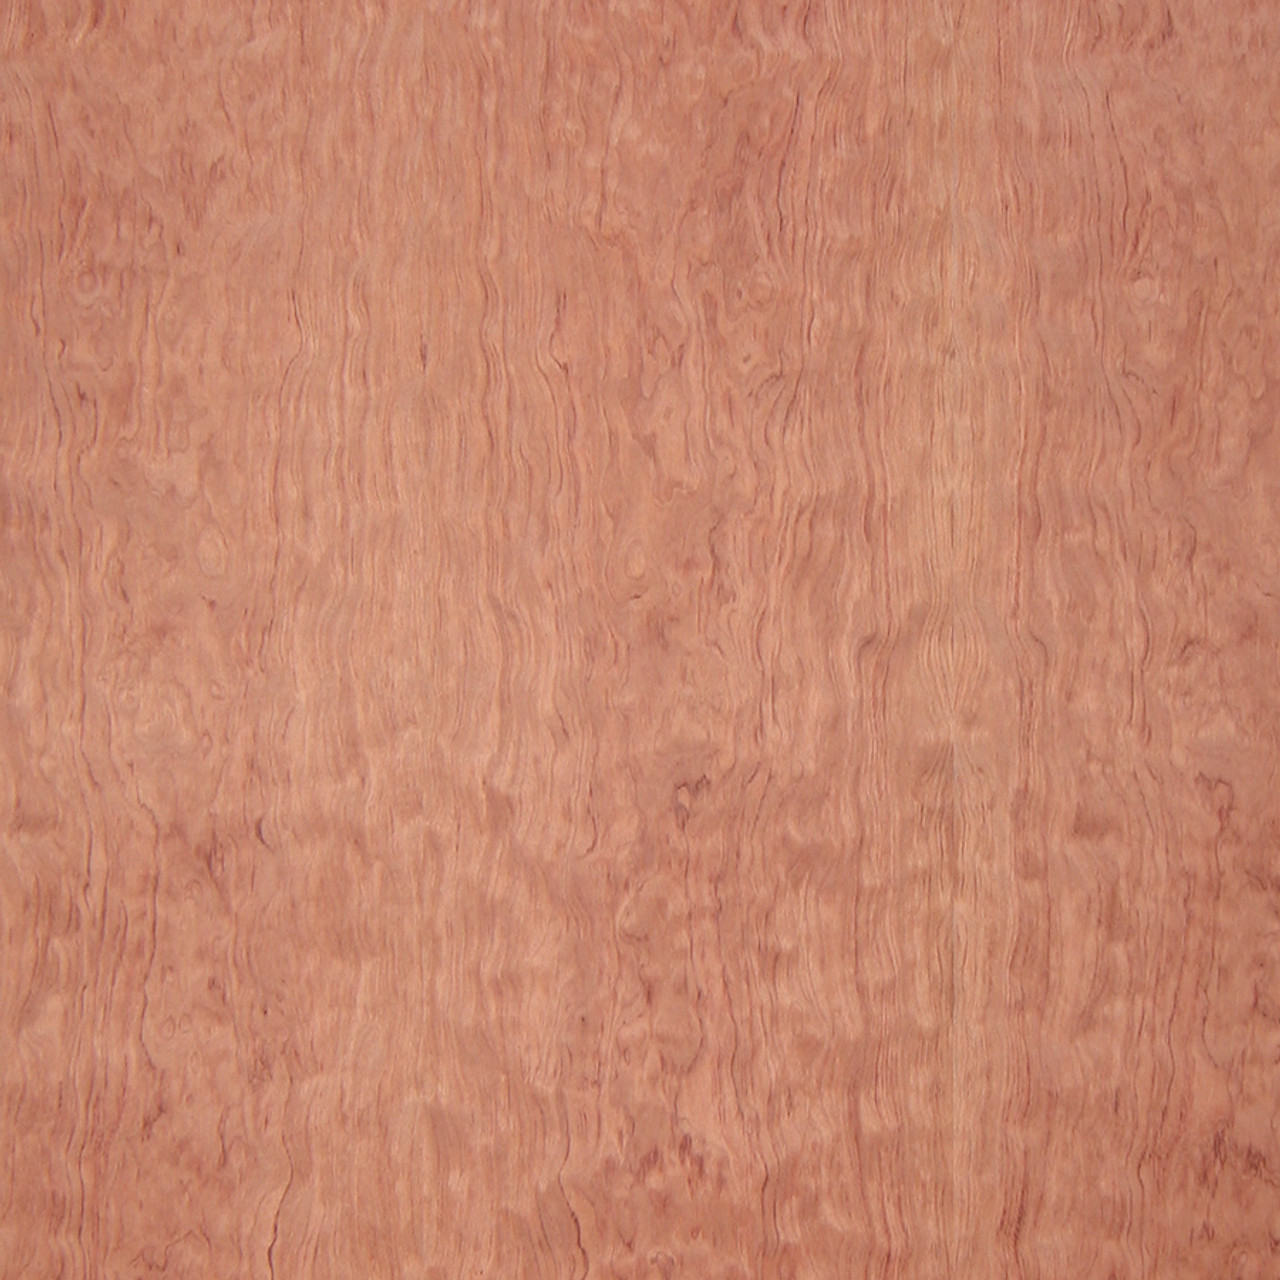 burl wood grain types Archives - Redwood Burl Inc.